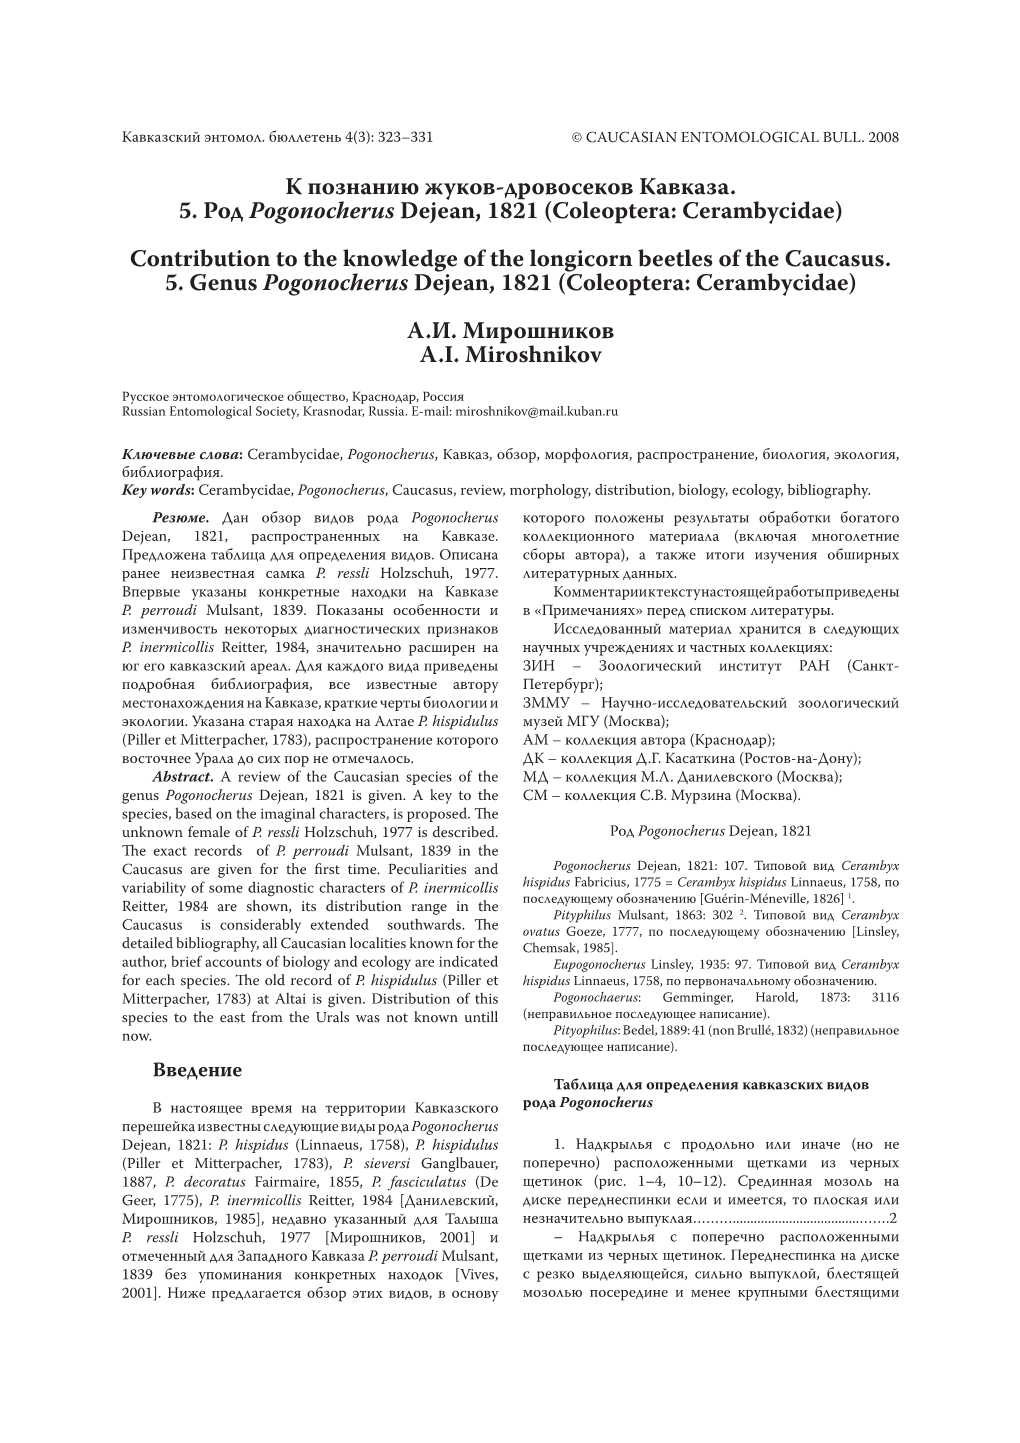 Coleoptera: Cerambycidae) Contribution to the Knowledge of the Longicorn Beetles of the Caucasus